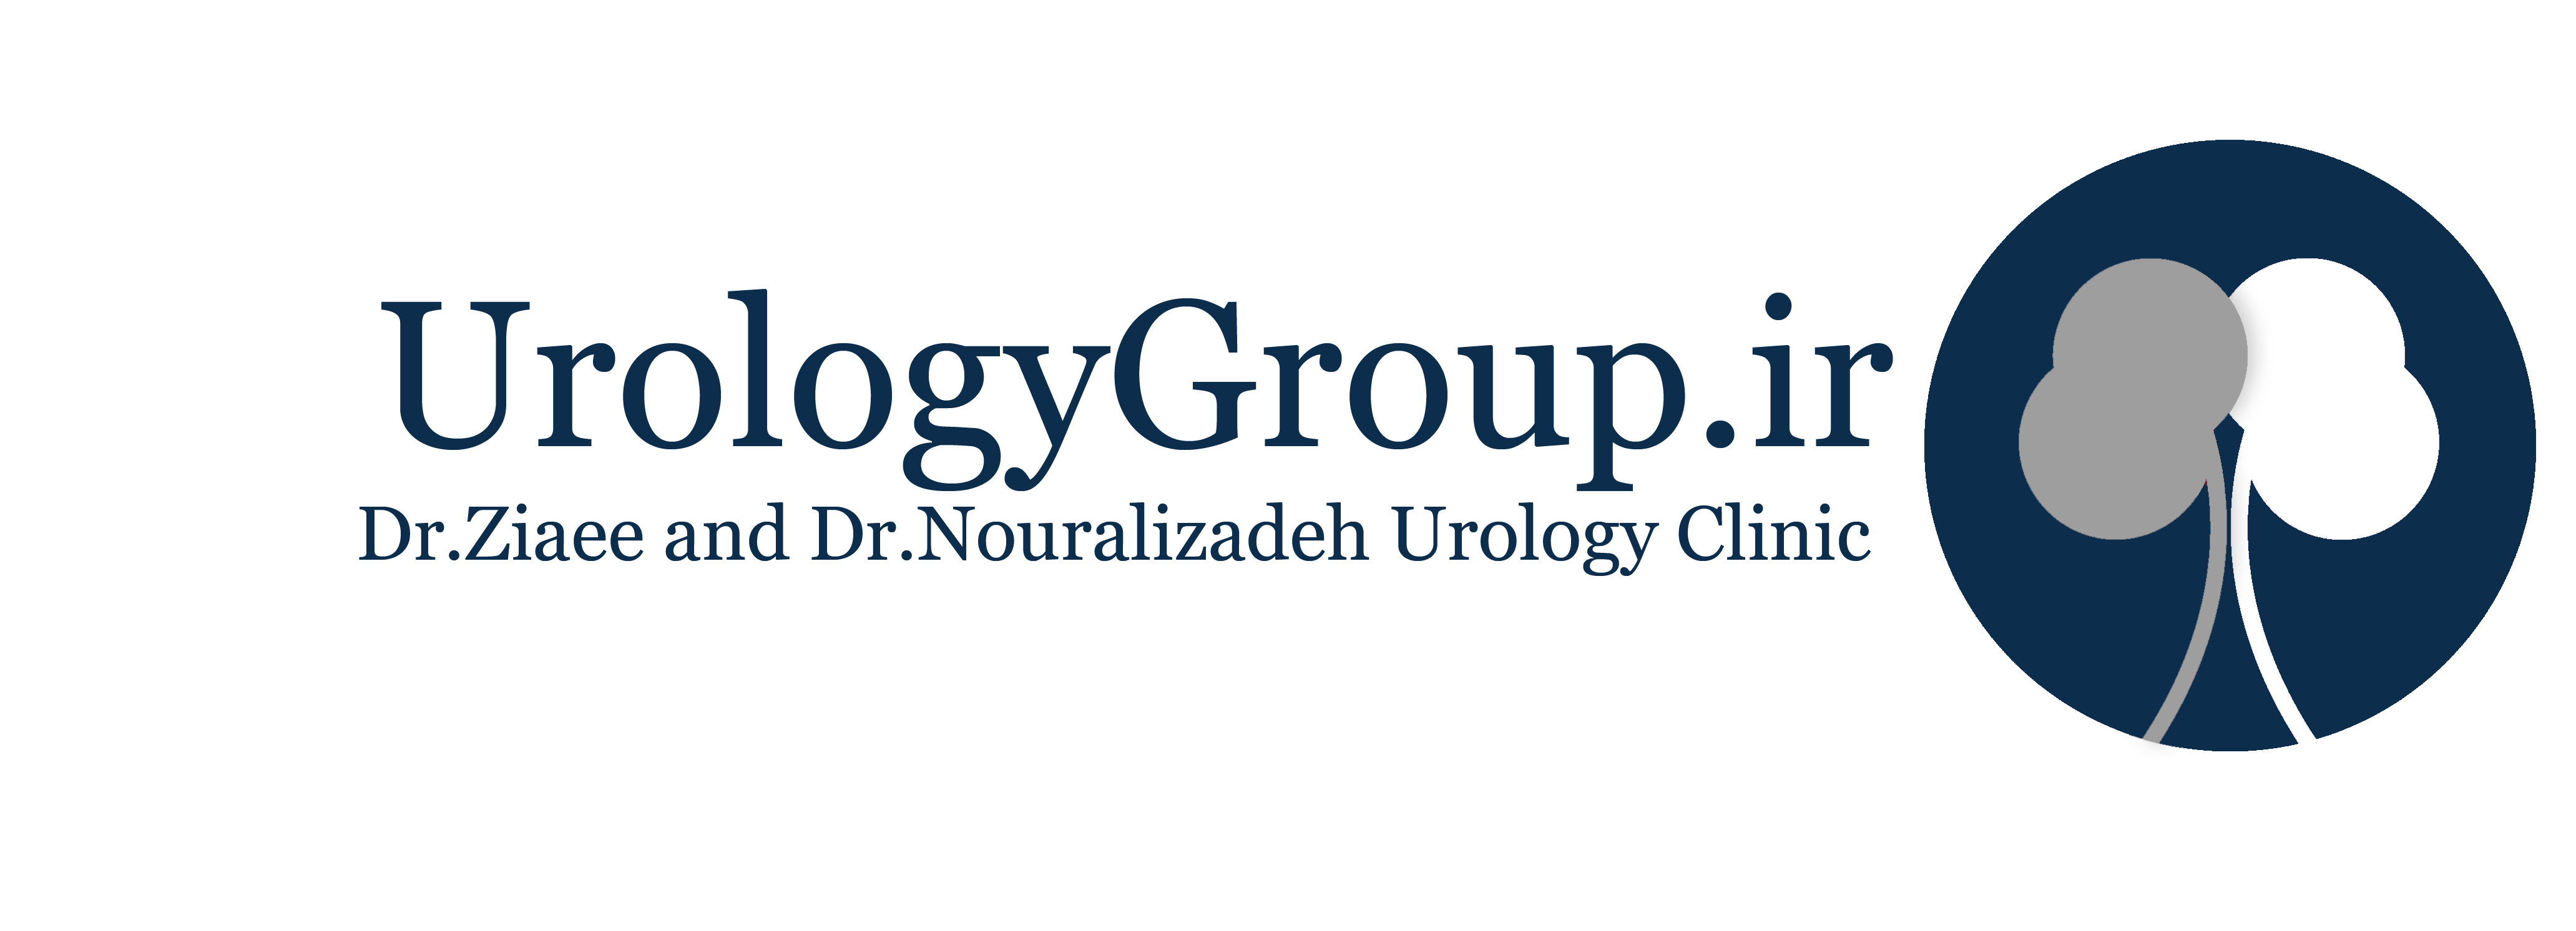 urology group